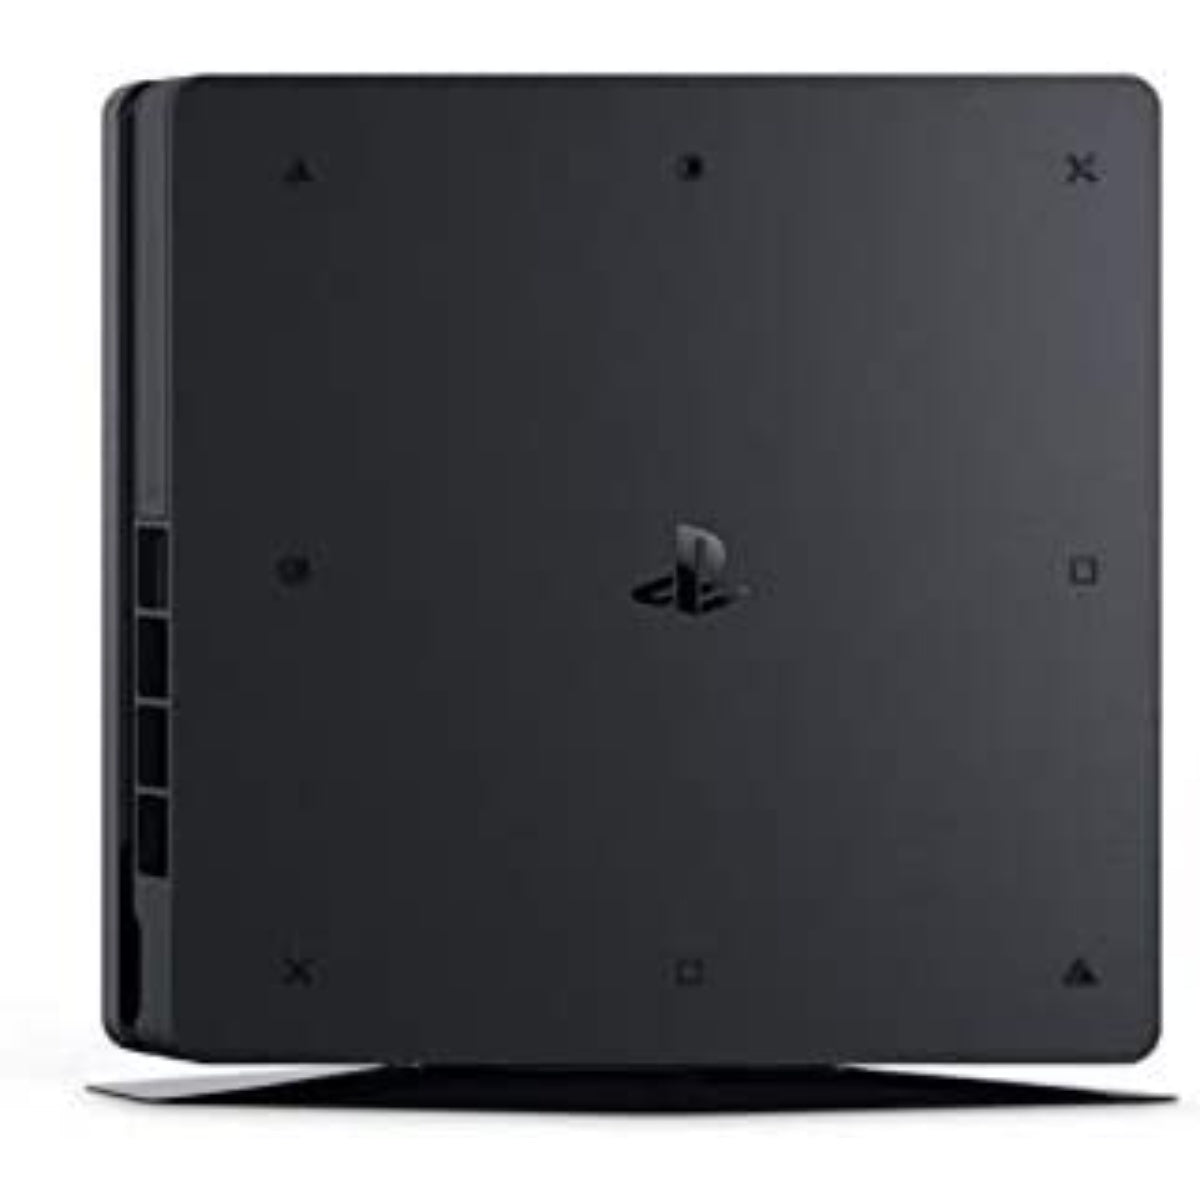 Sony PlayStation - PS4 1TB Slim Console (Black), HDR - International Version